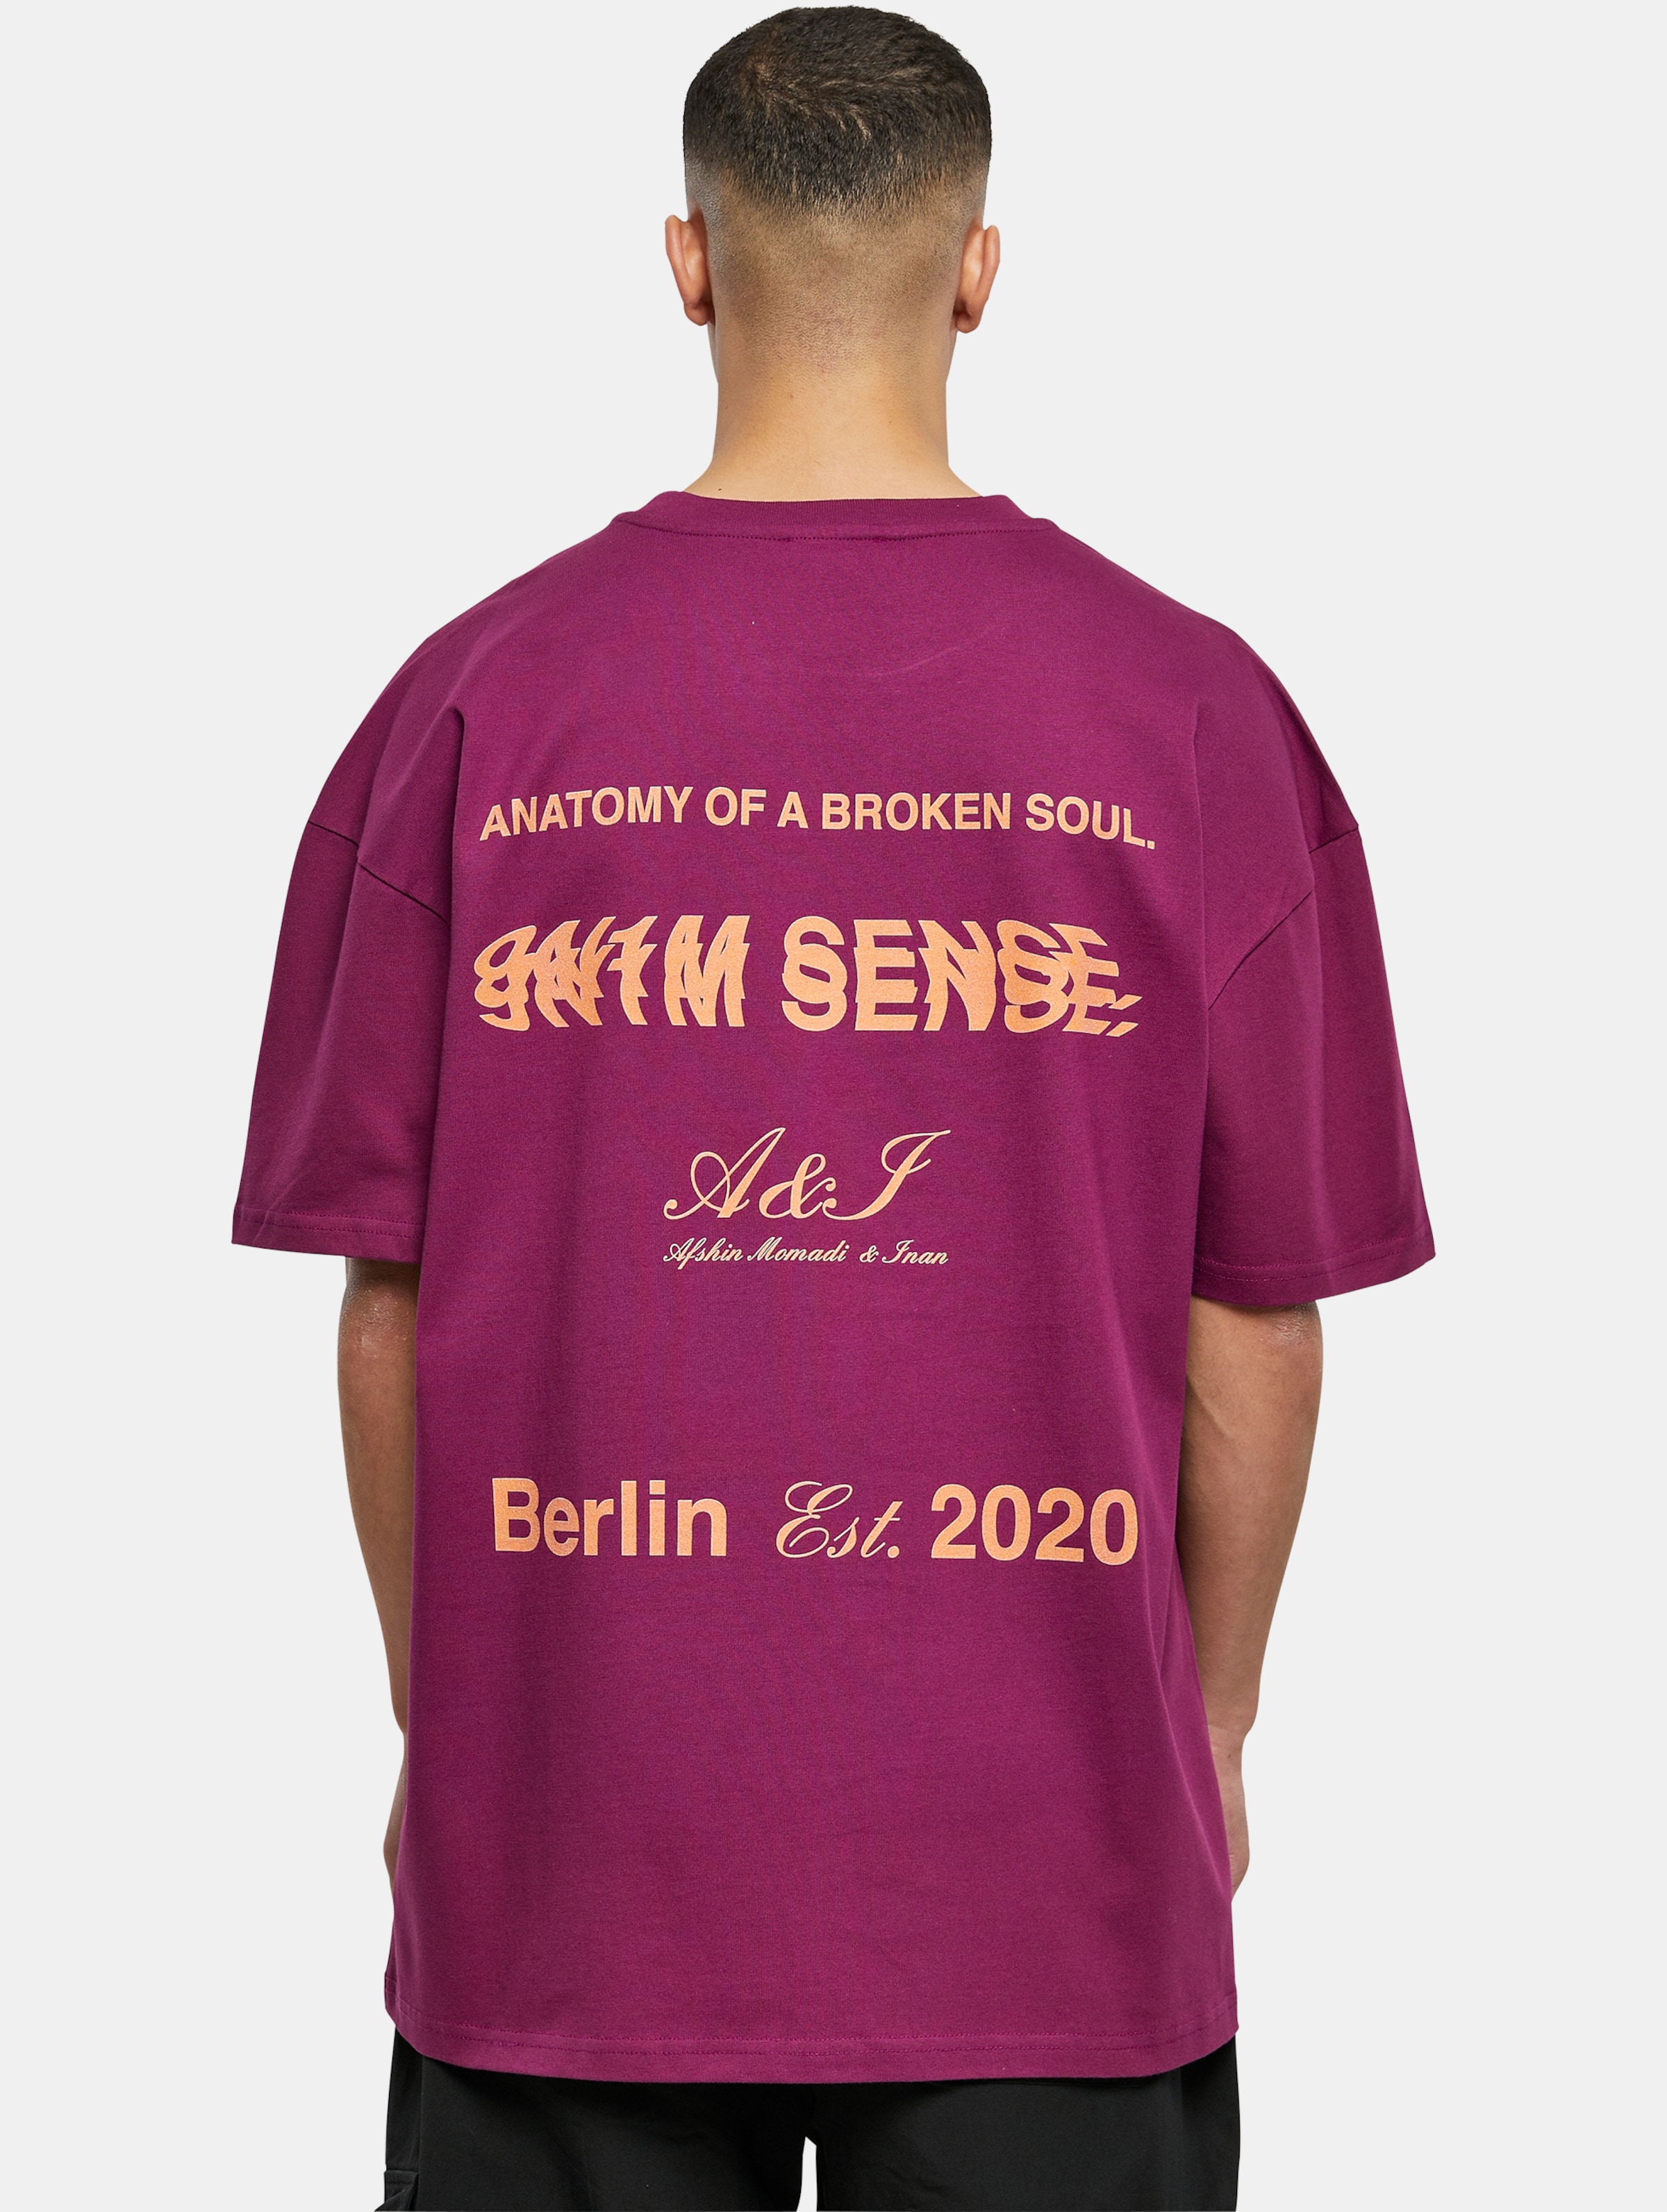 9N1M SENSE ANATOMY 2 T-Shirt Männer,Unisex op kleur violet, Maat L